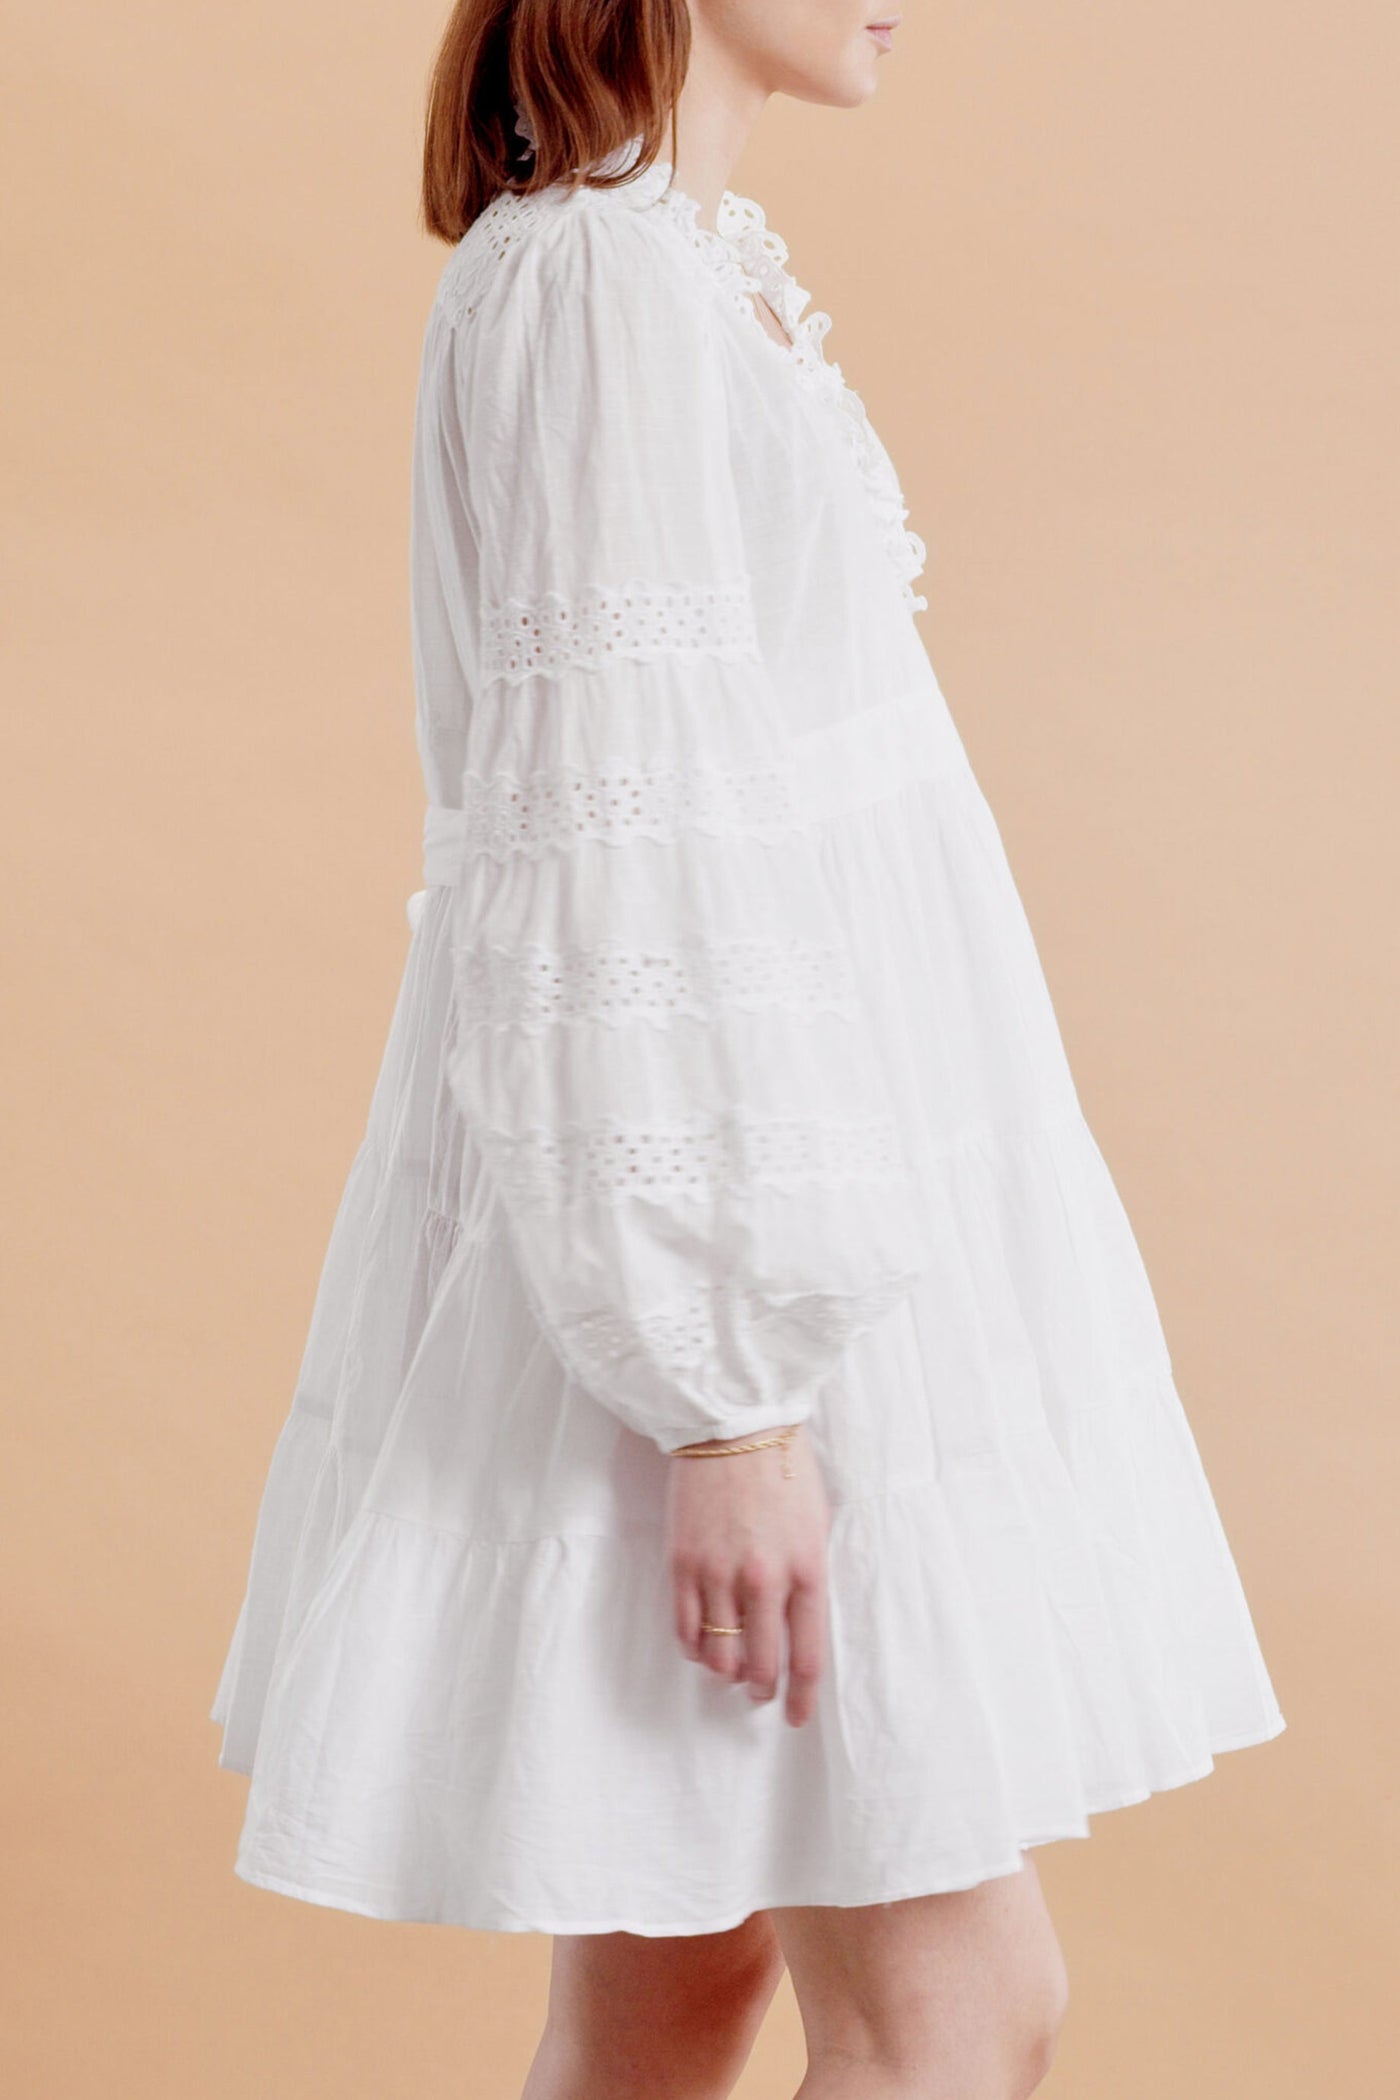 ByTimo Angel Dress - White